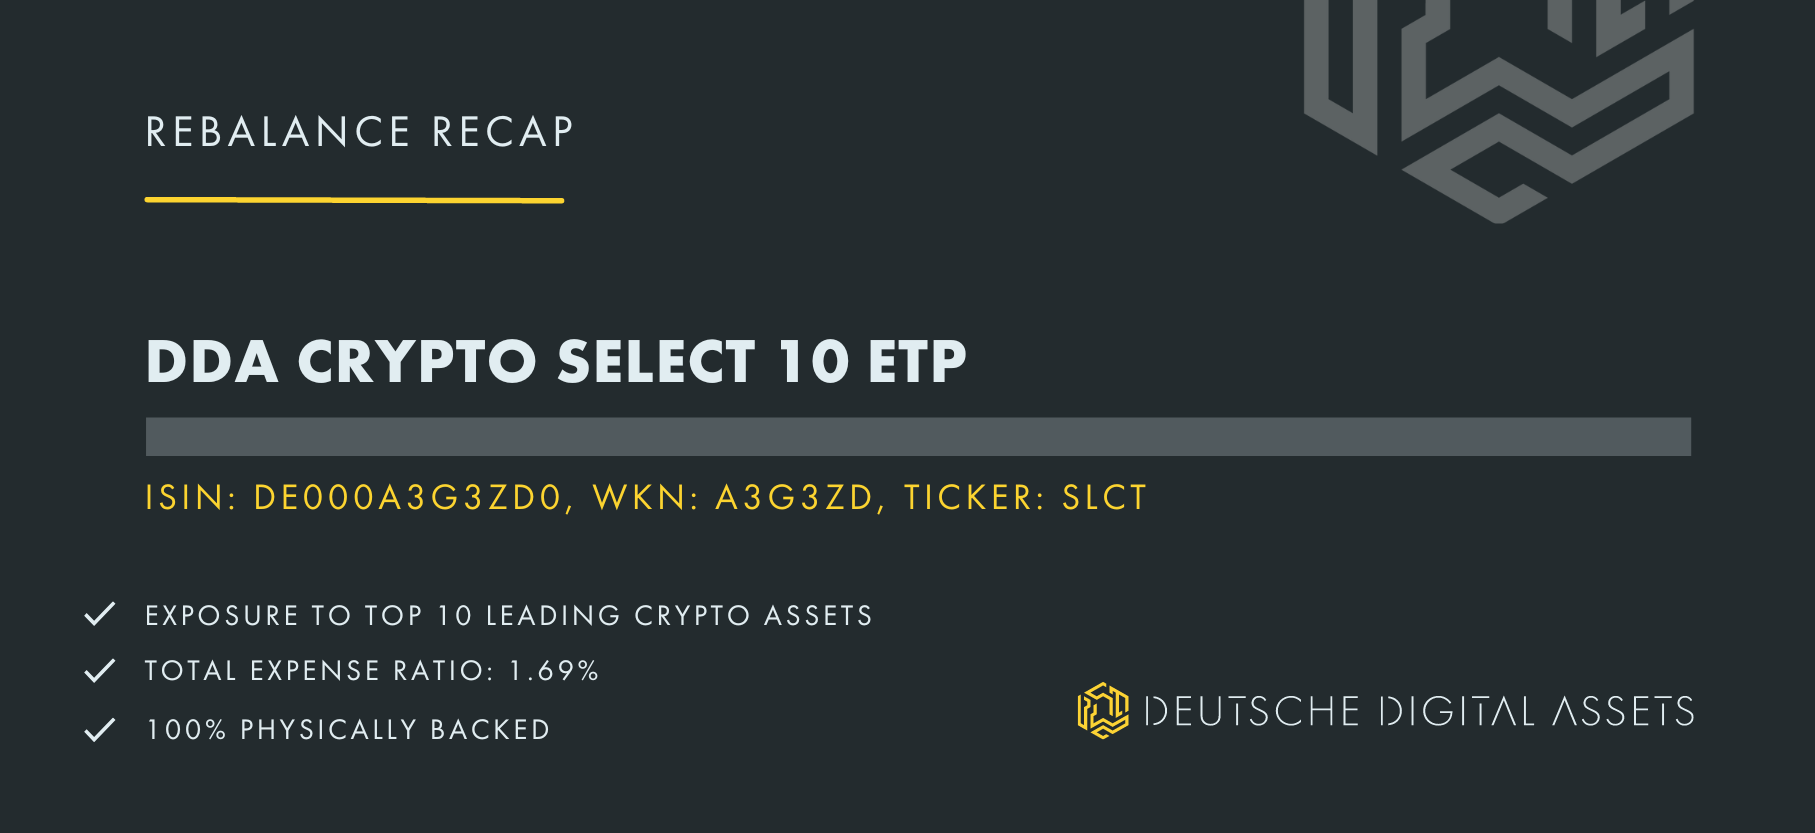 DDA Crypto Select 10 ETP Rebalance Recap 